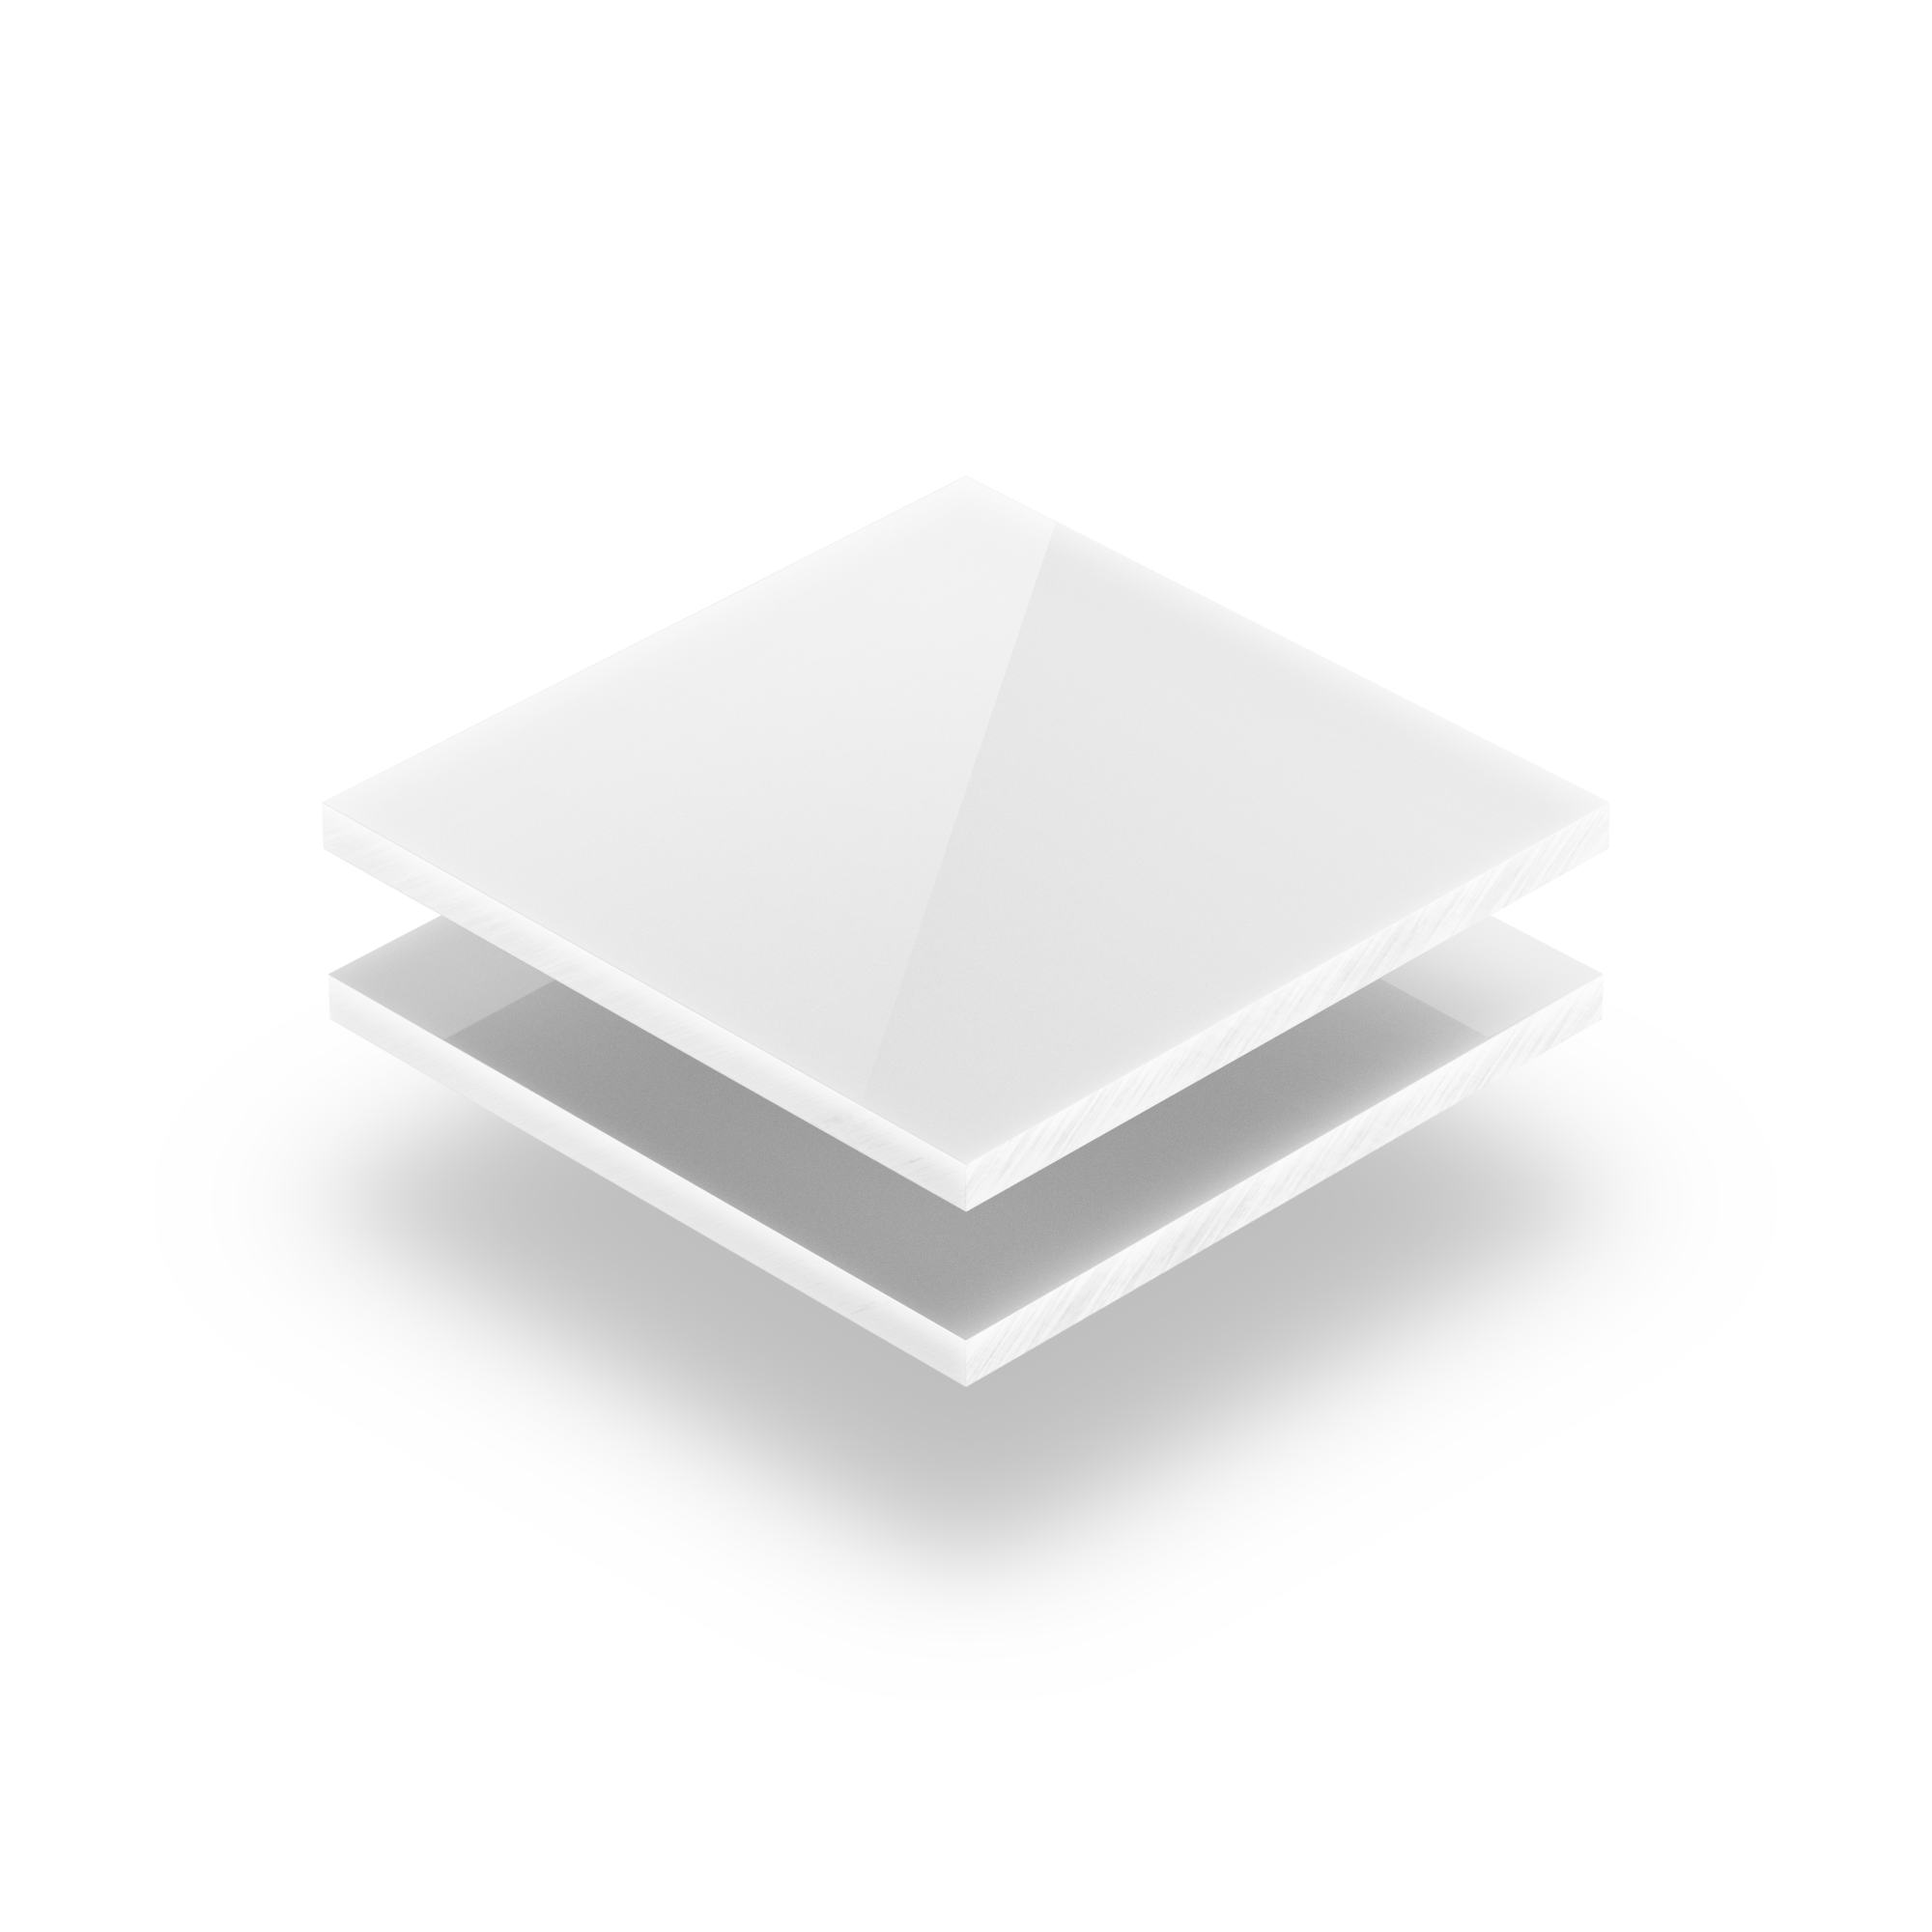 2019507 PLEXIGLAS® Acrylglas opal weiß 45% LD Kunden Angebot 